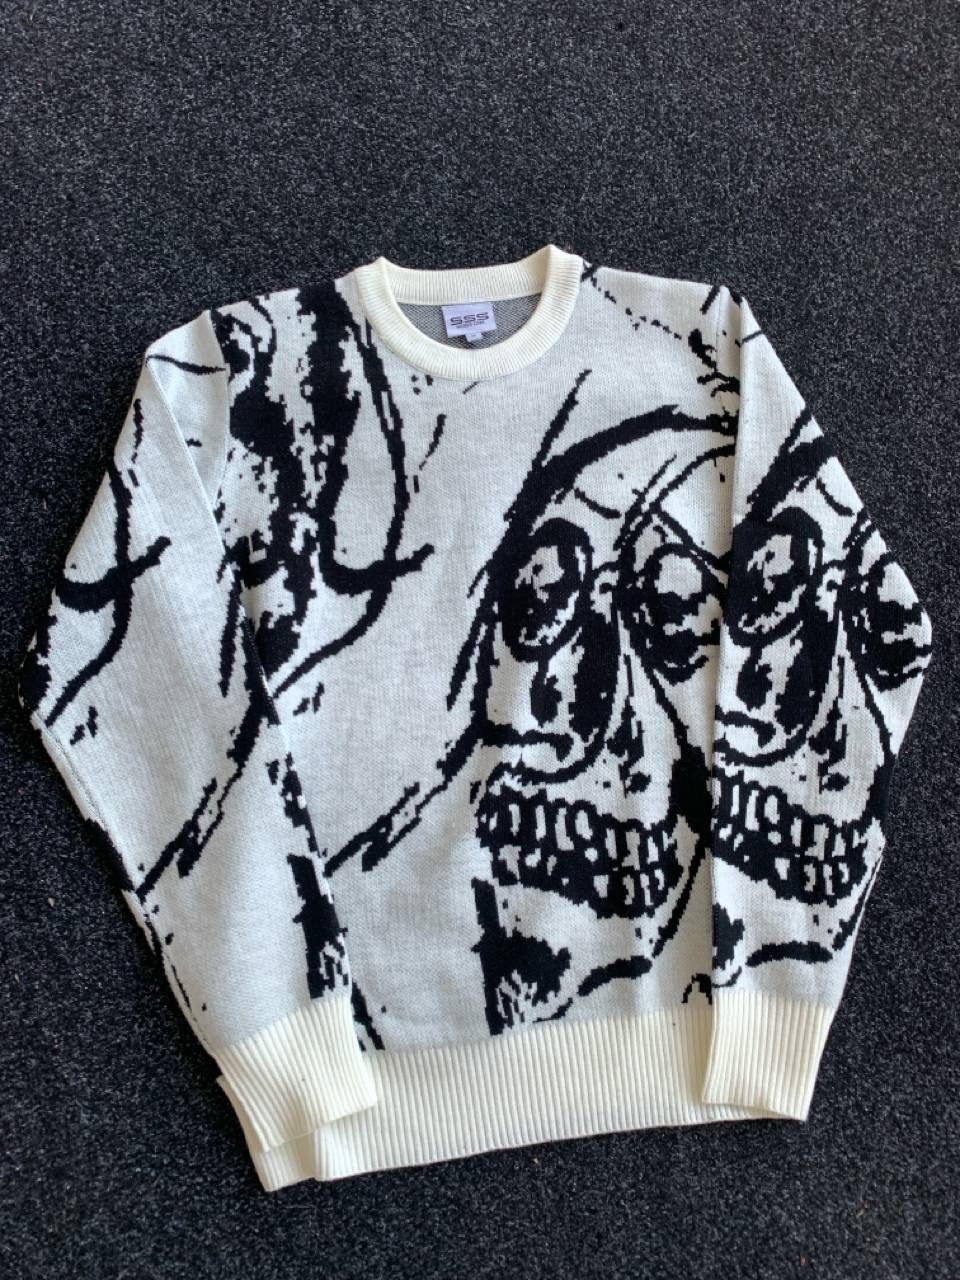 Rare SSS World Corp Sweater. | Grailed